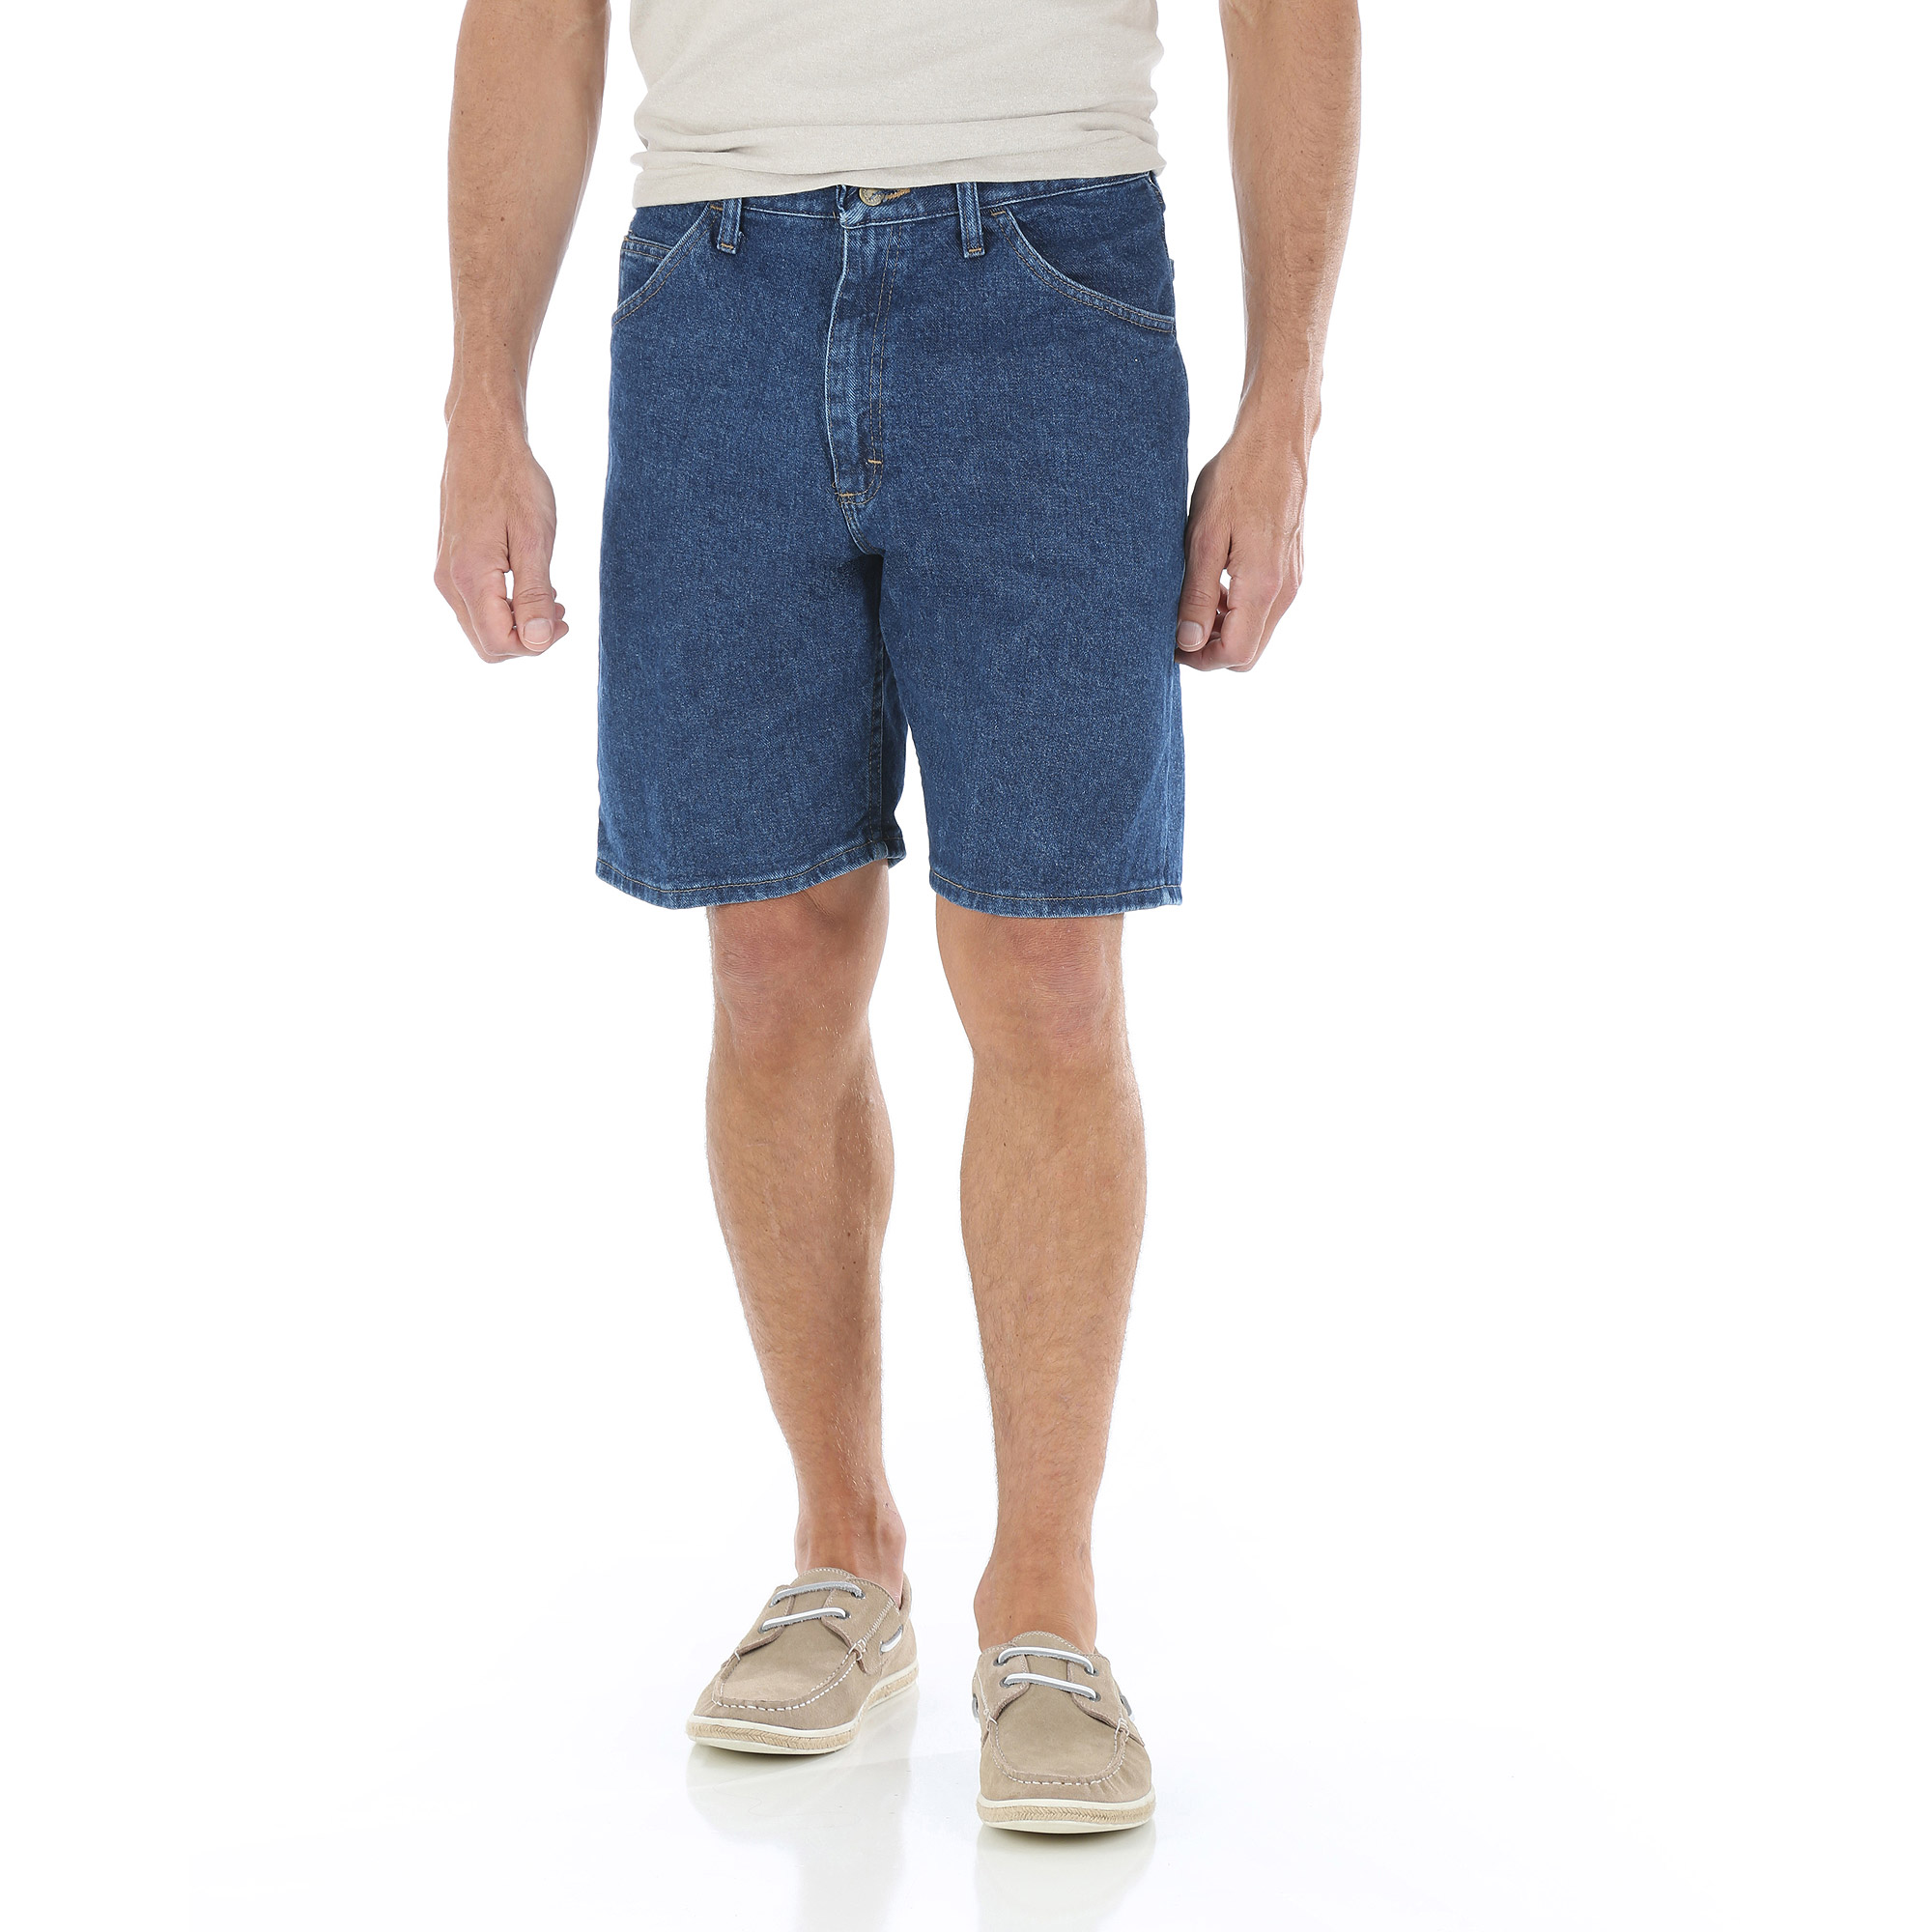 Mens denim shorts- hotly demanded product